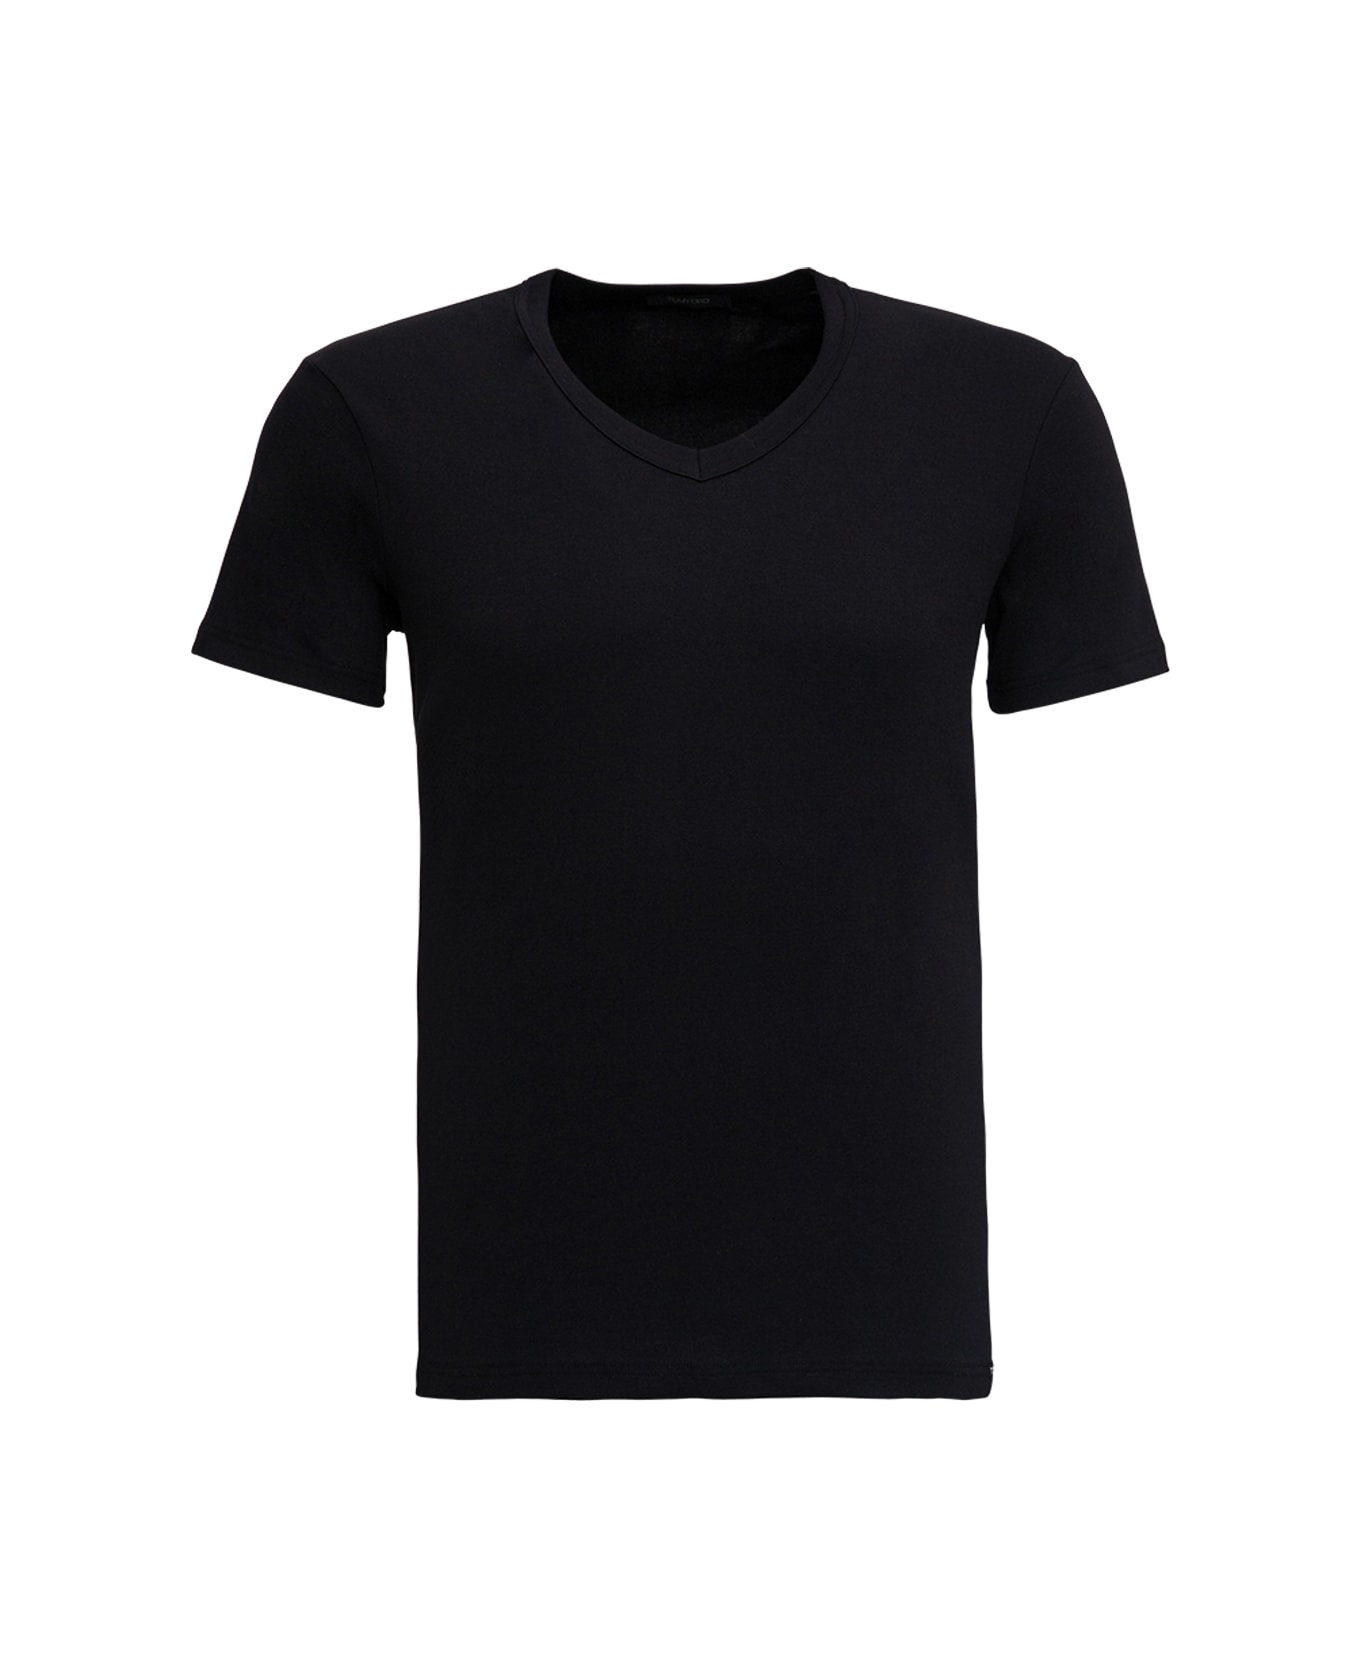 Tom Ford Black V-neck T-shirt Short Sleeves In Cotton Stretch Man - Black シャツ